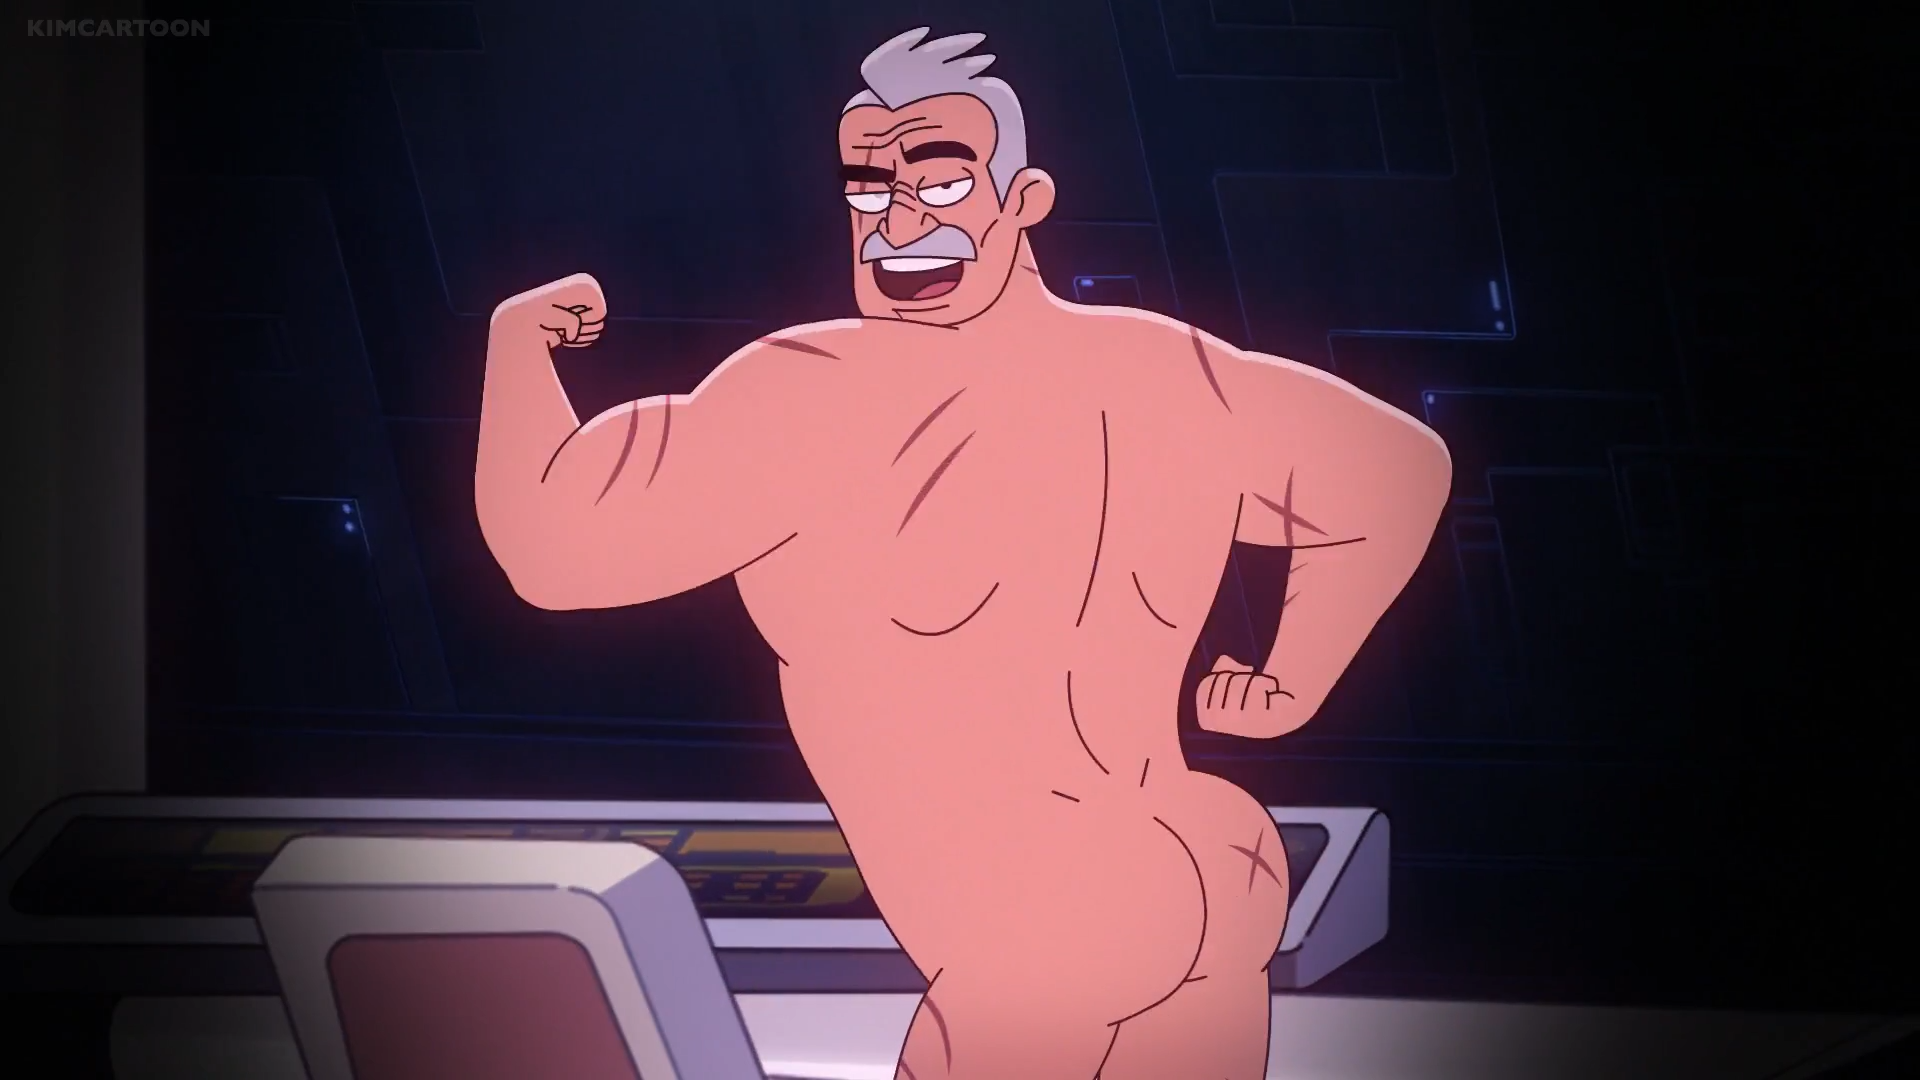 Star Trek Cartoon Nudes - Shirtless Cartoon Boys & Men: Star Trek: Lower Decks: All Naked Men